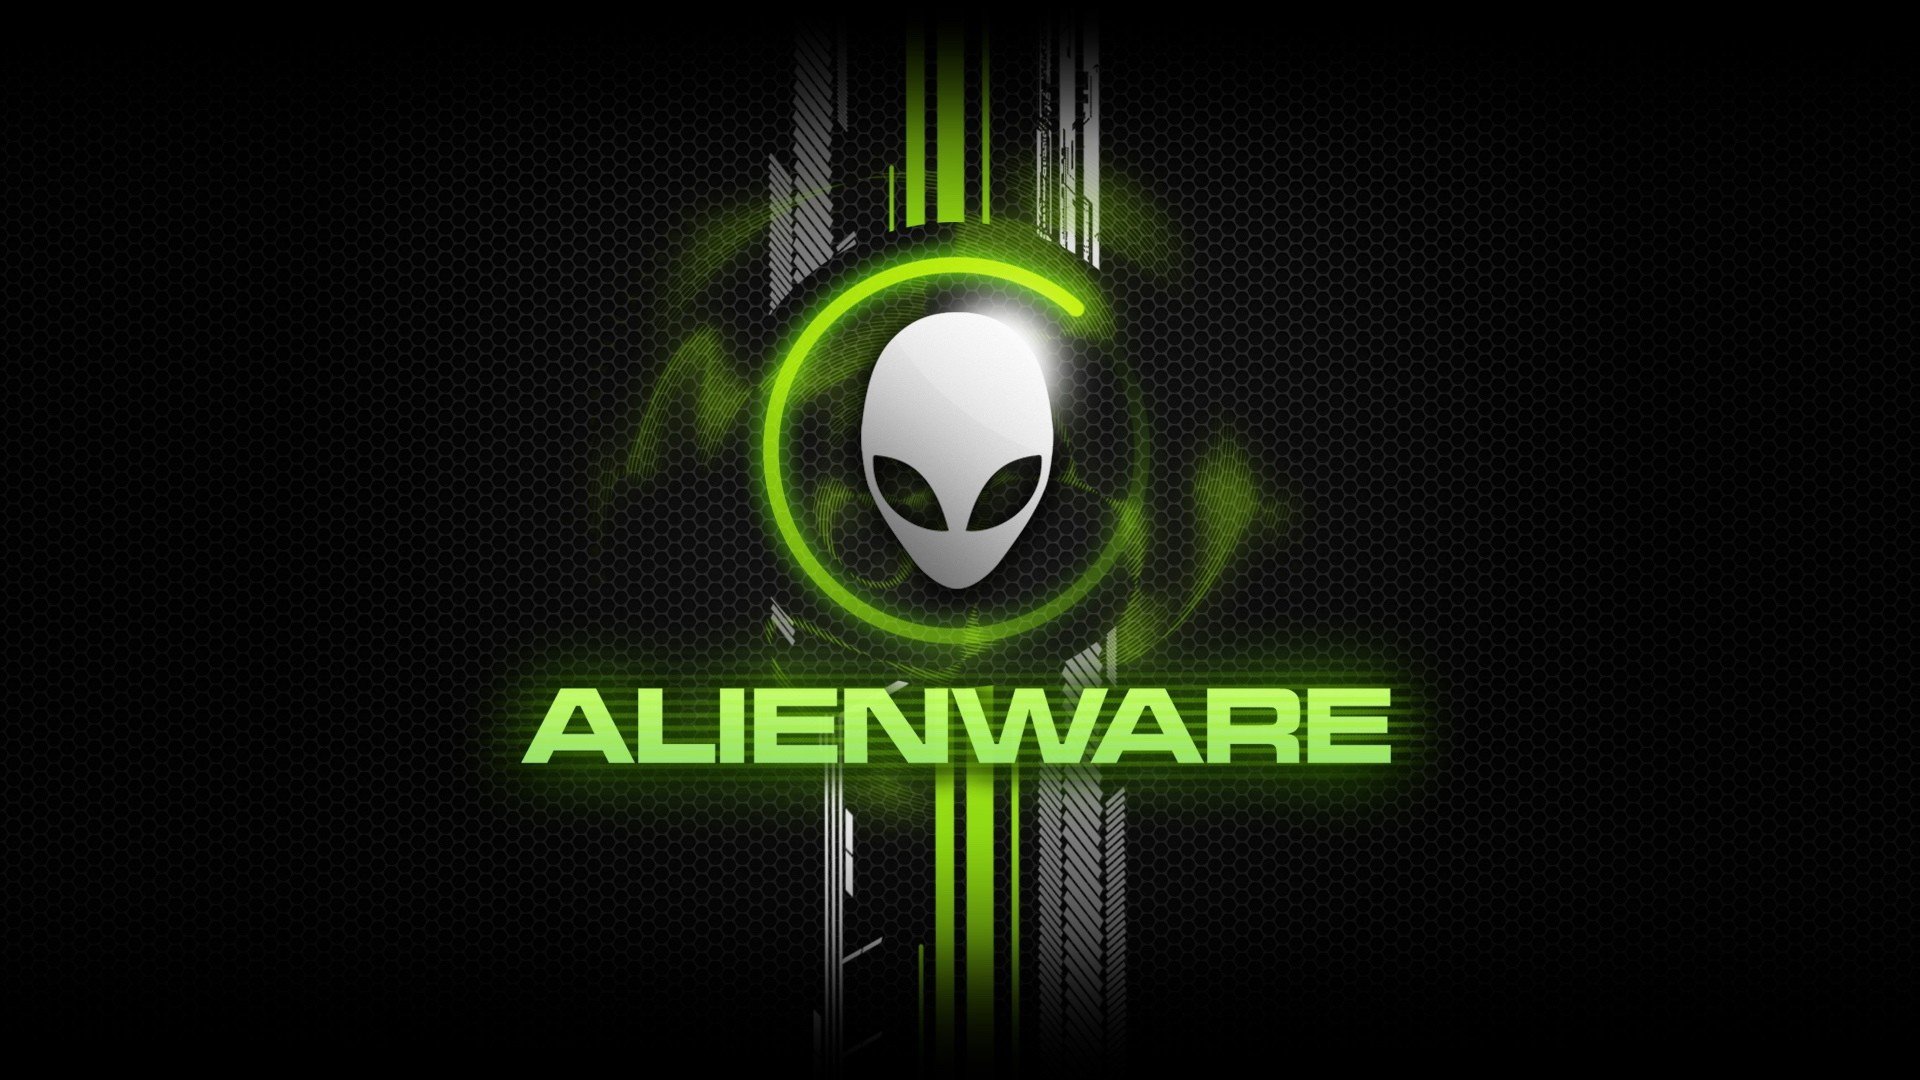 HD Alienware Wallpapers 19201080 Alienware Backgrounds for Laptops 1920x1080